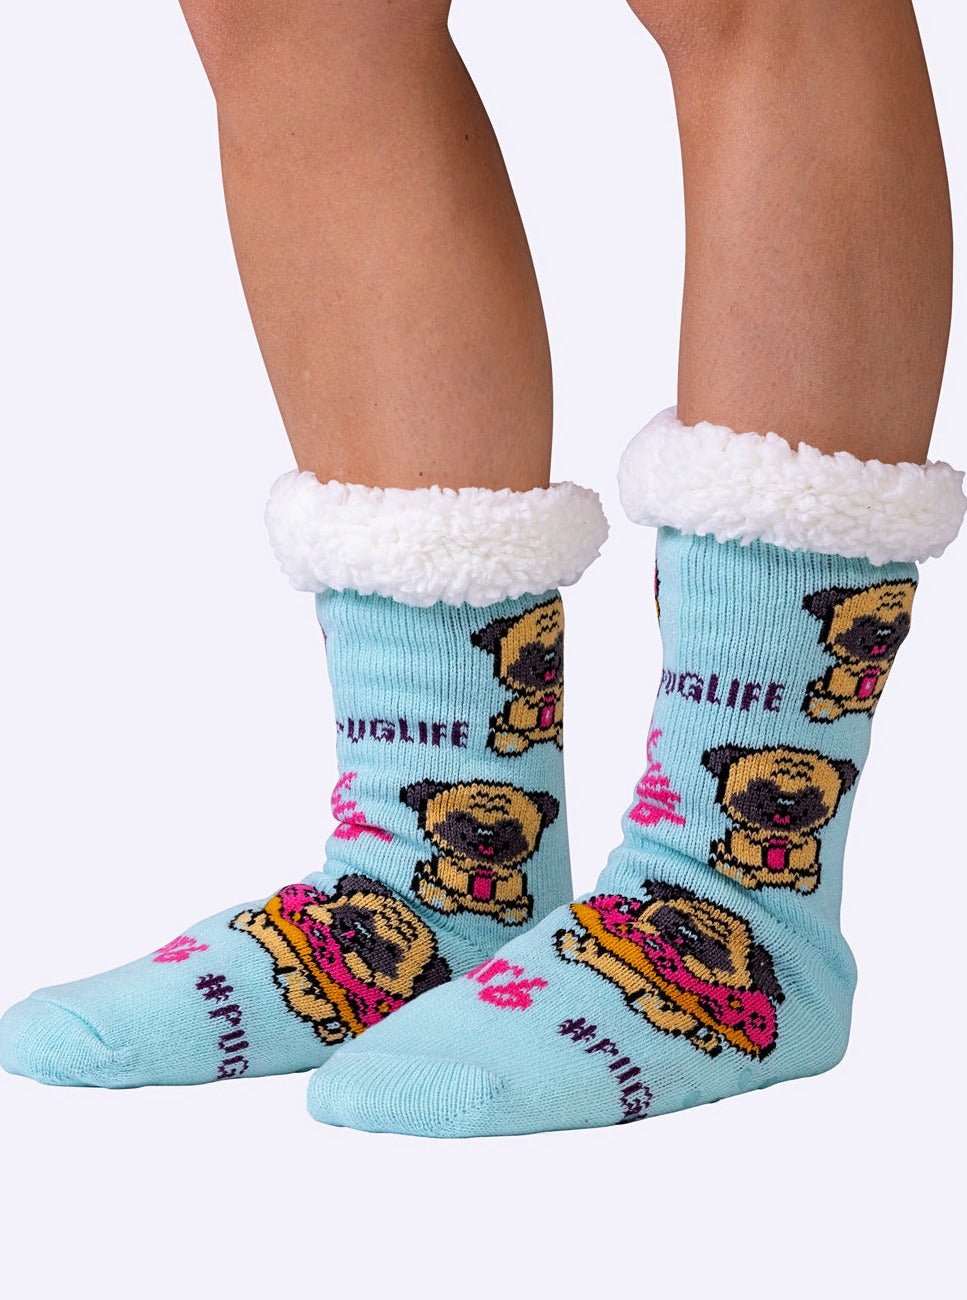 NEW Pug Life Fluffy Slipper Socks - Shnugz